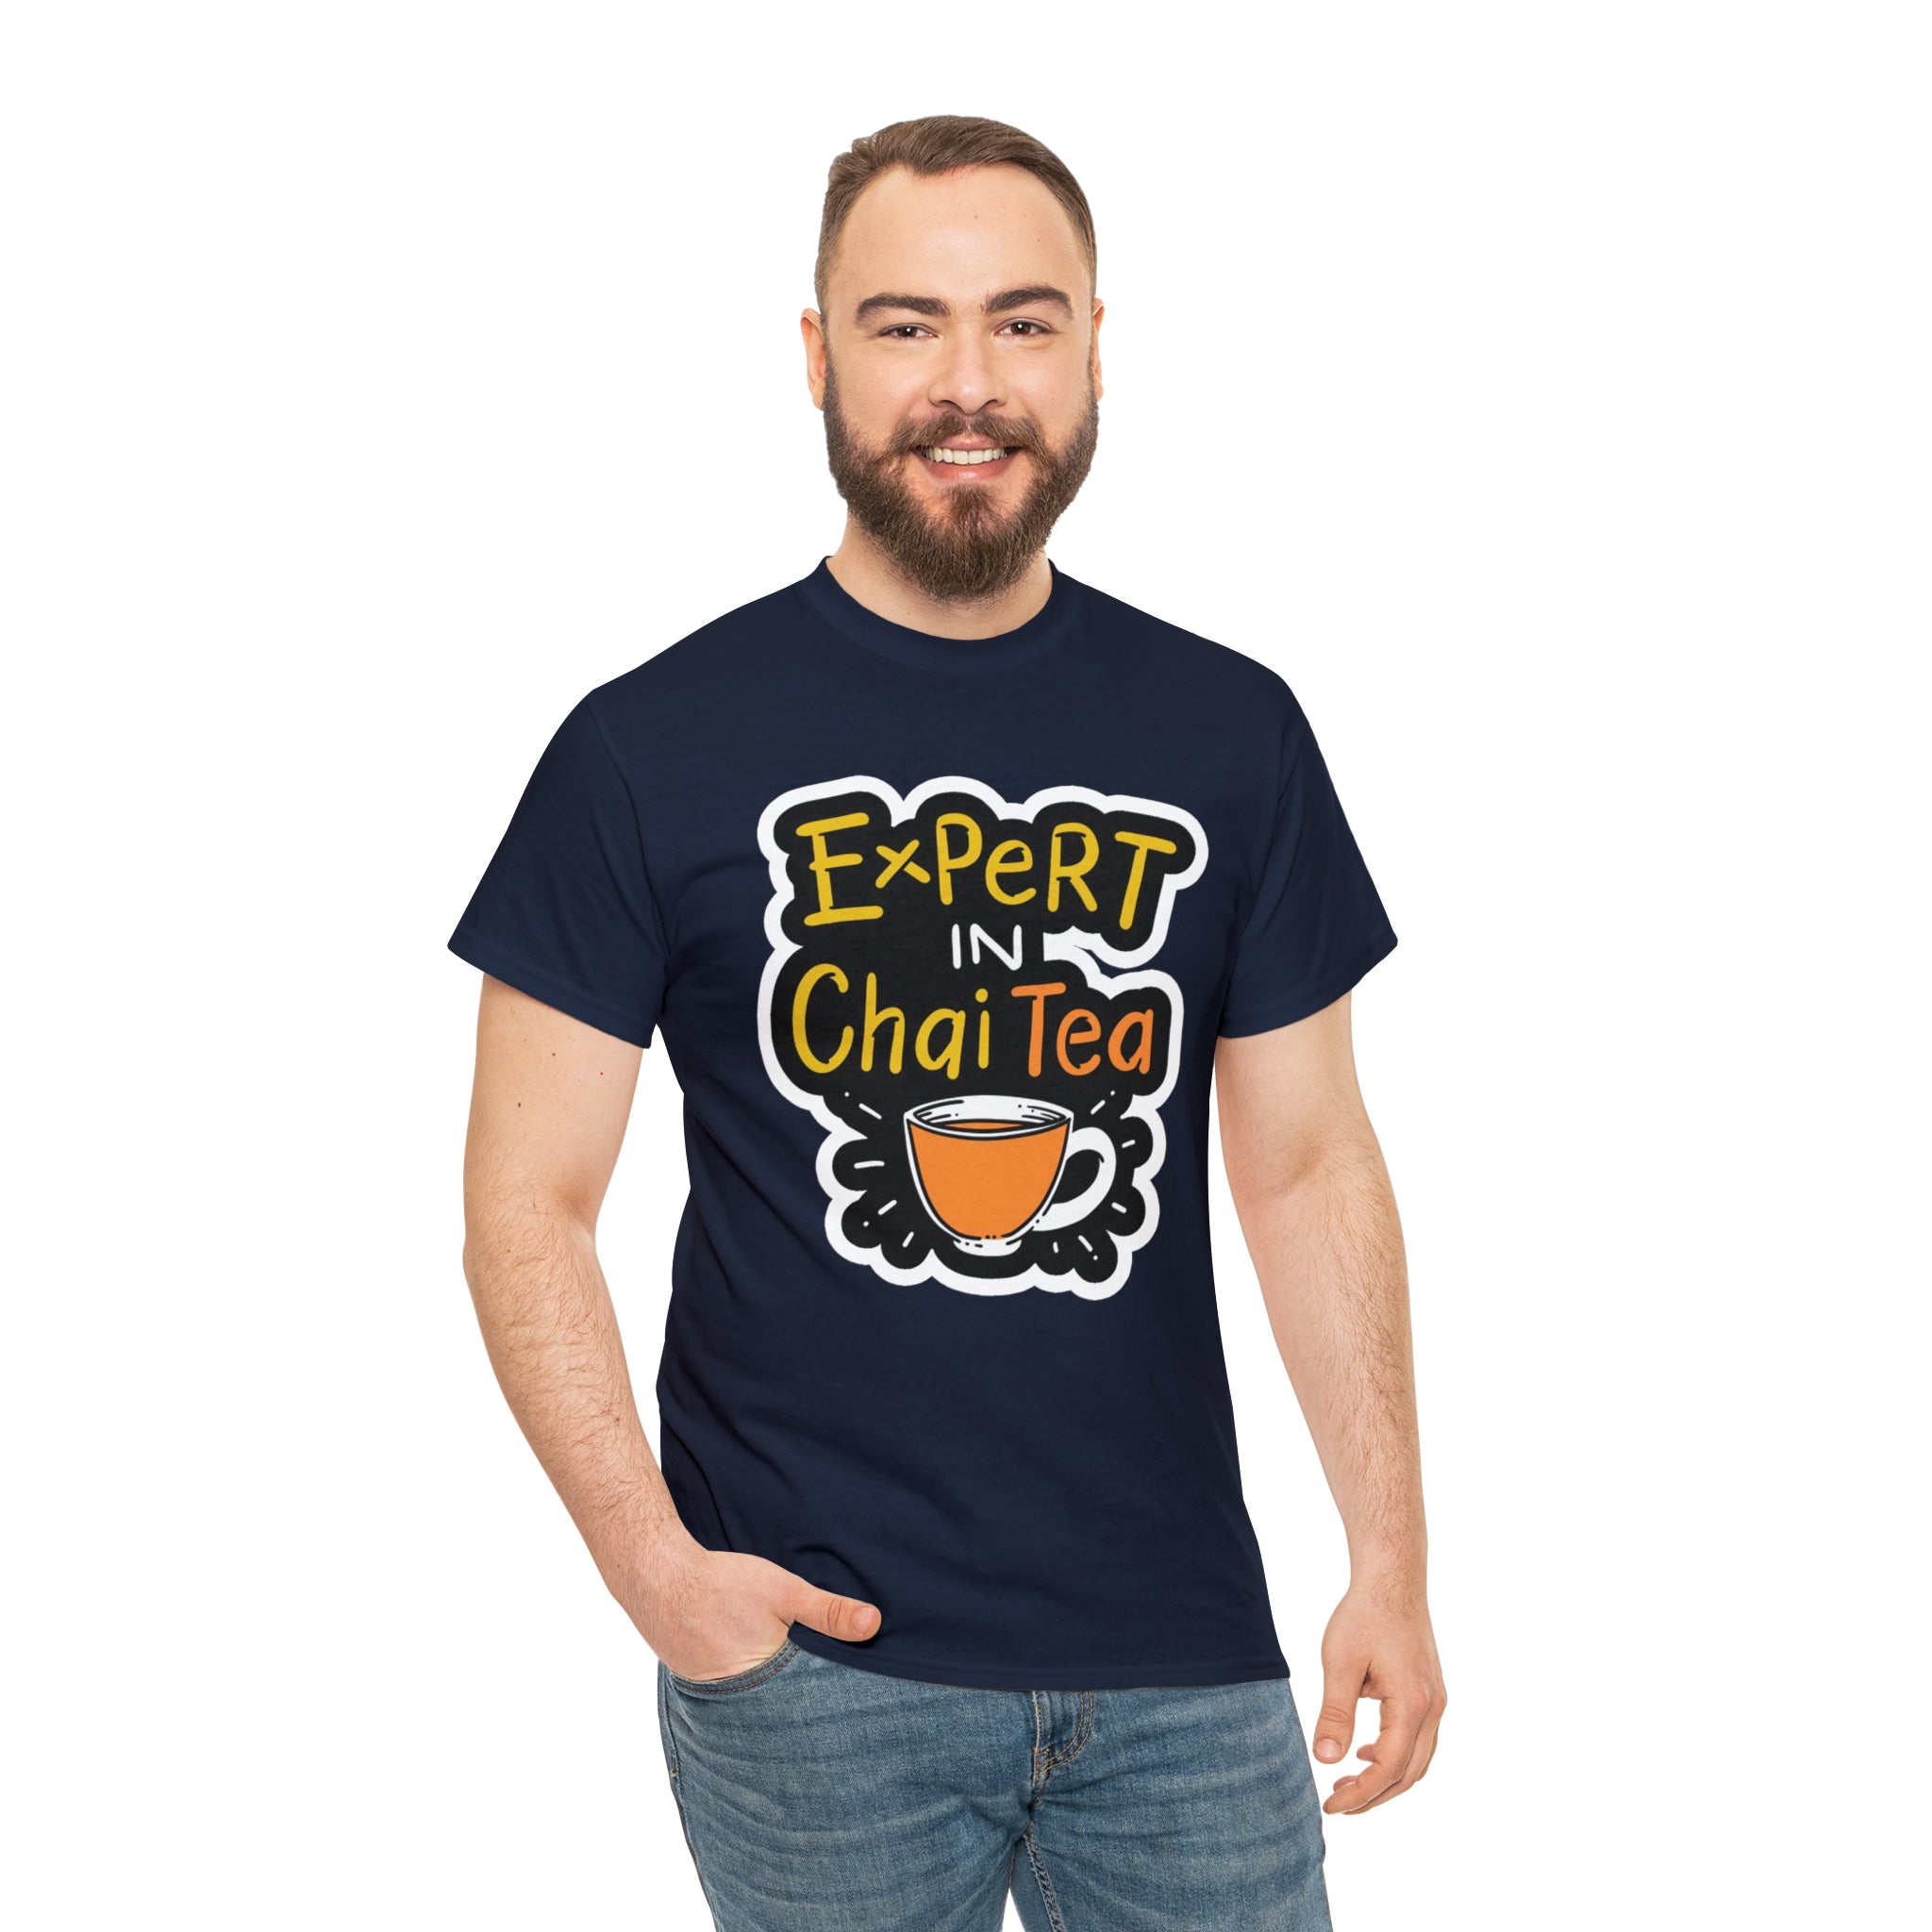 Expert in Chai Tea T-Shirt Design by C&C